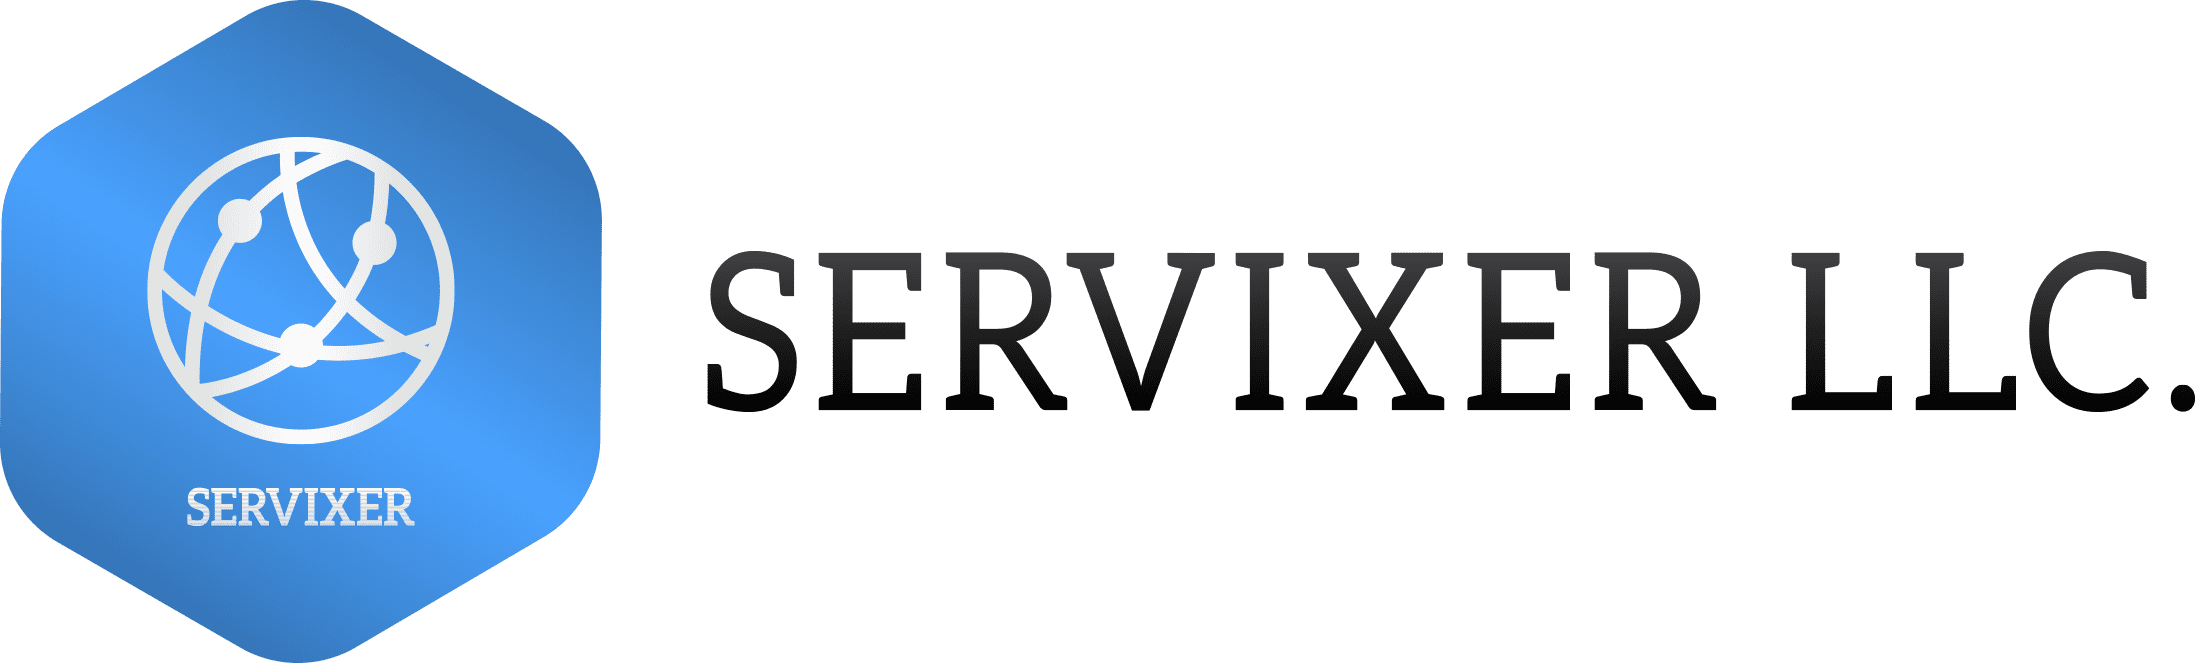 Speech-to-Text Transcription Services | Servixer LLC